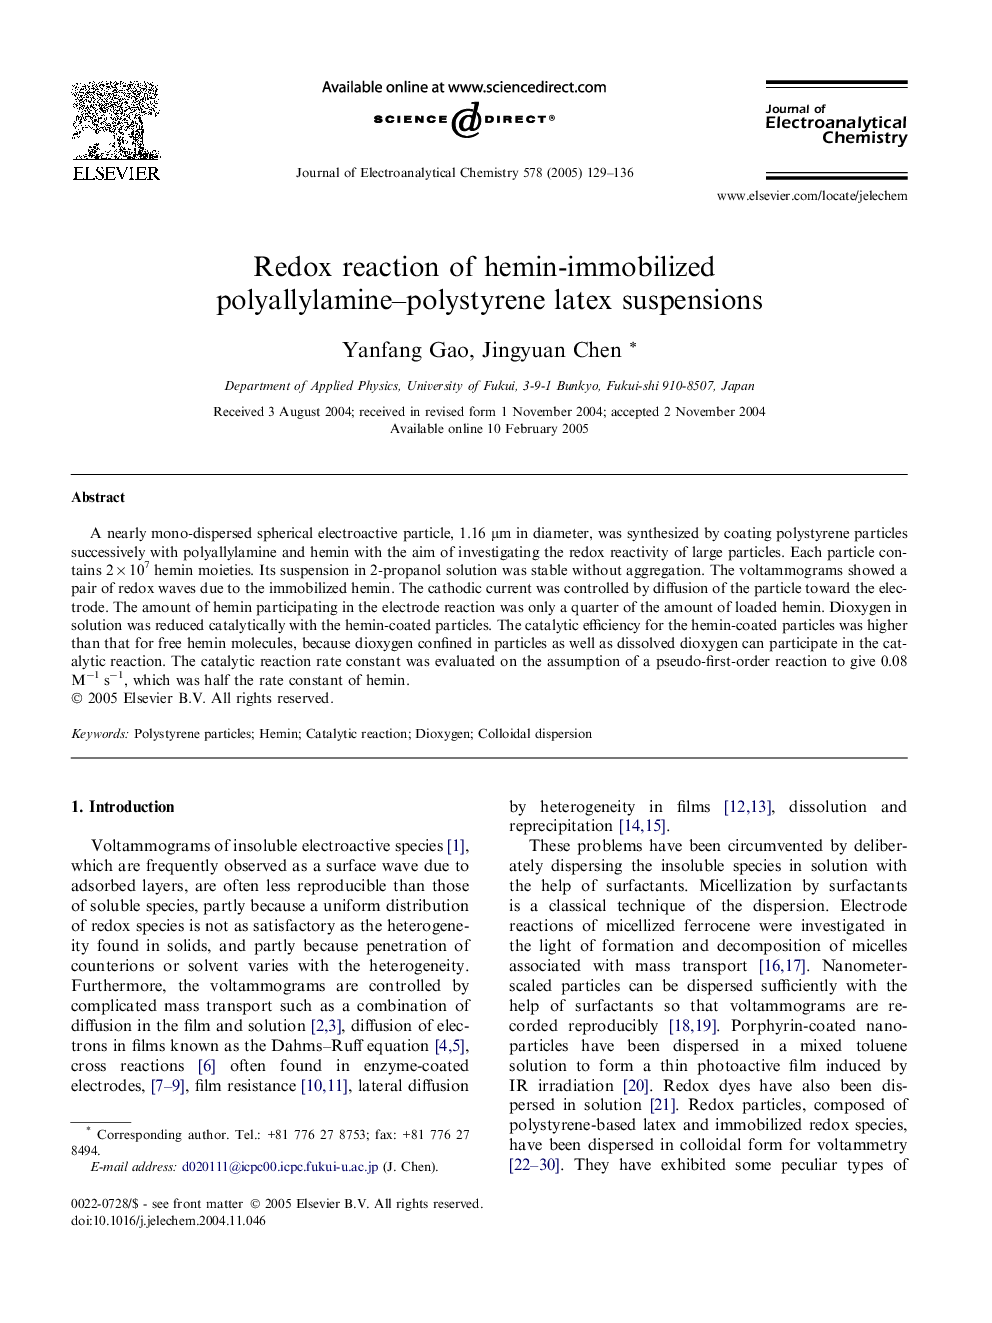 Redox reaction of hemin-immobilized polyallylamine-polystyrene latex suspensions